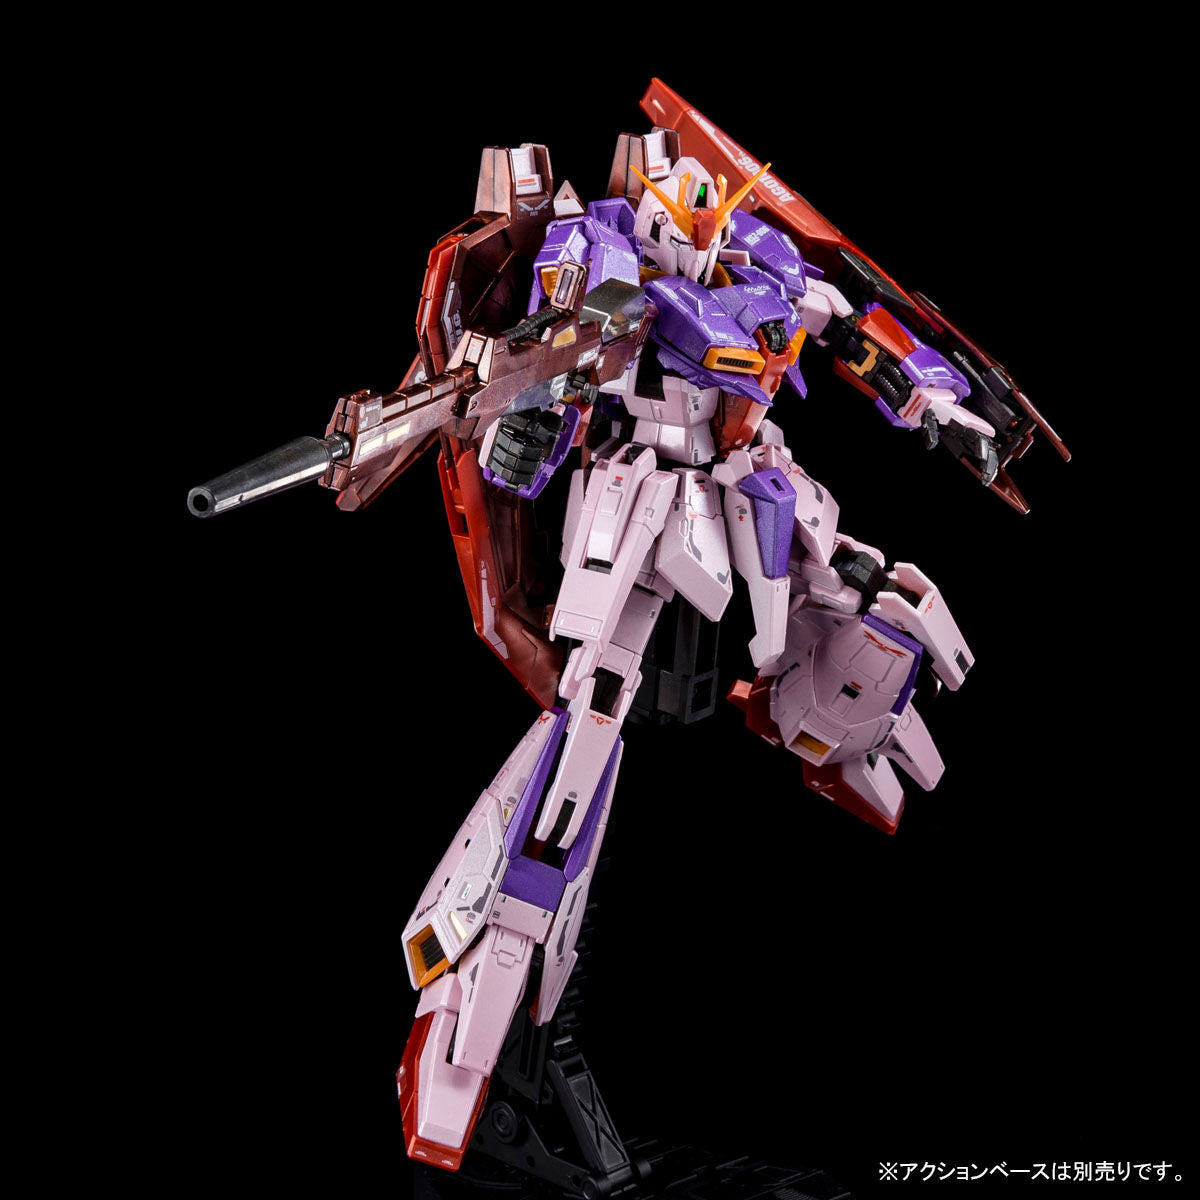 Gundam 1/144 RG Zeta Gundam MSZ-006 Zeta Gundam [Biosensor Image Color] Model Kit Exclusive